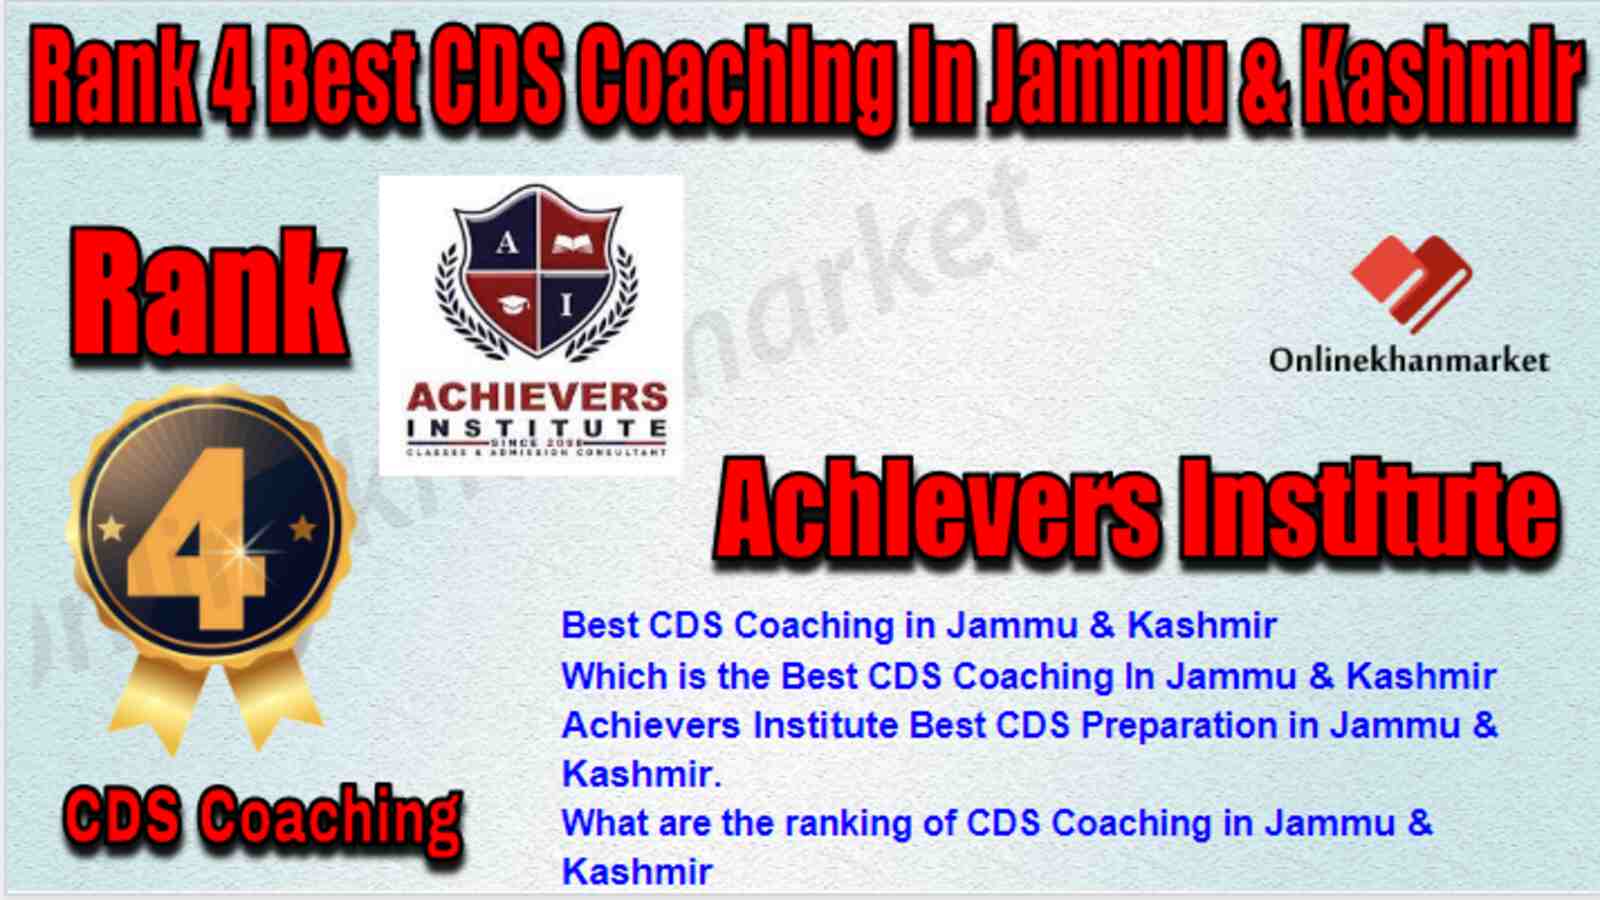 Rank 4 Best CDS Coaching in Jammu & Kashmir